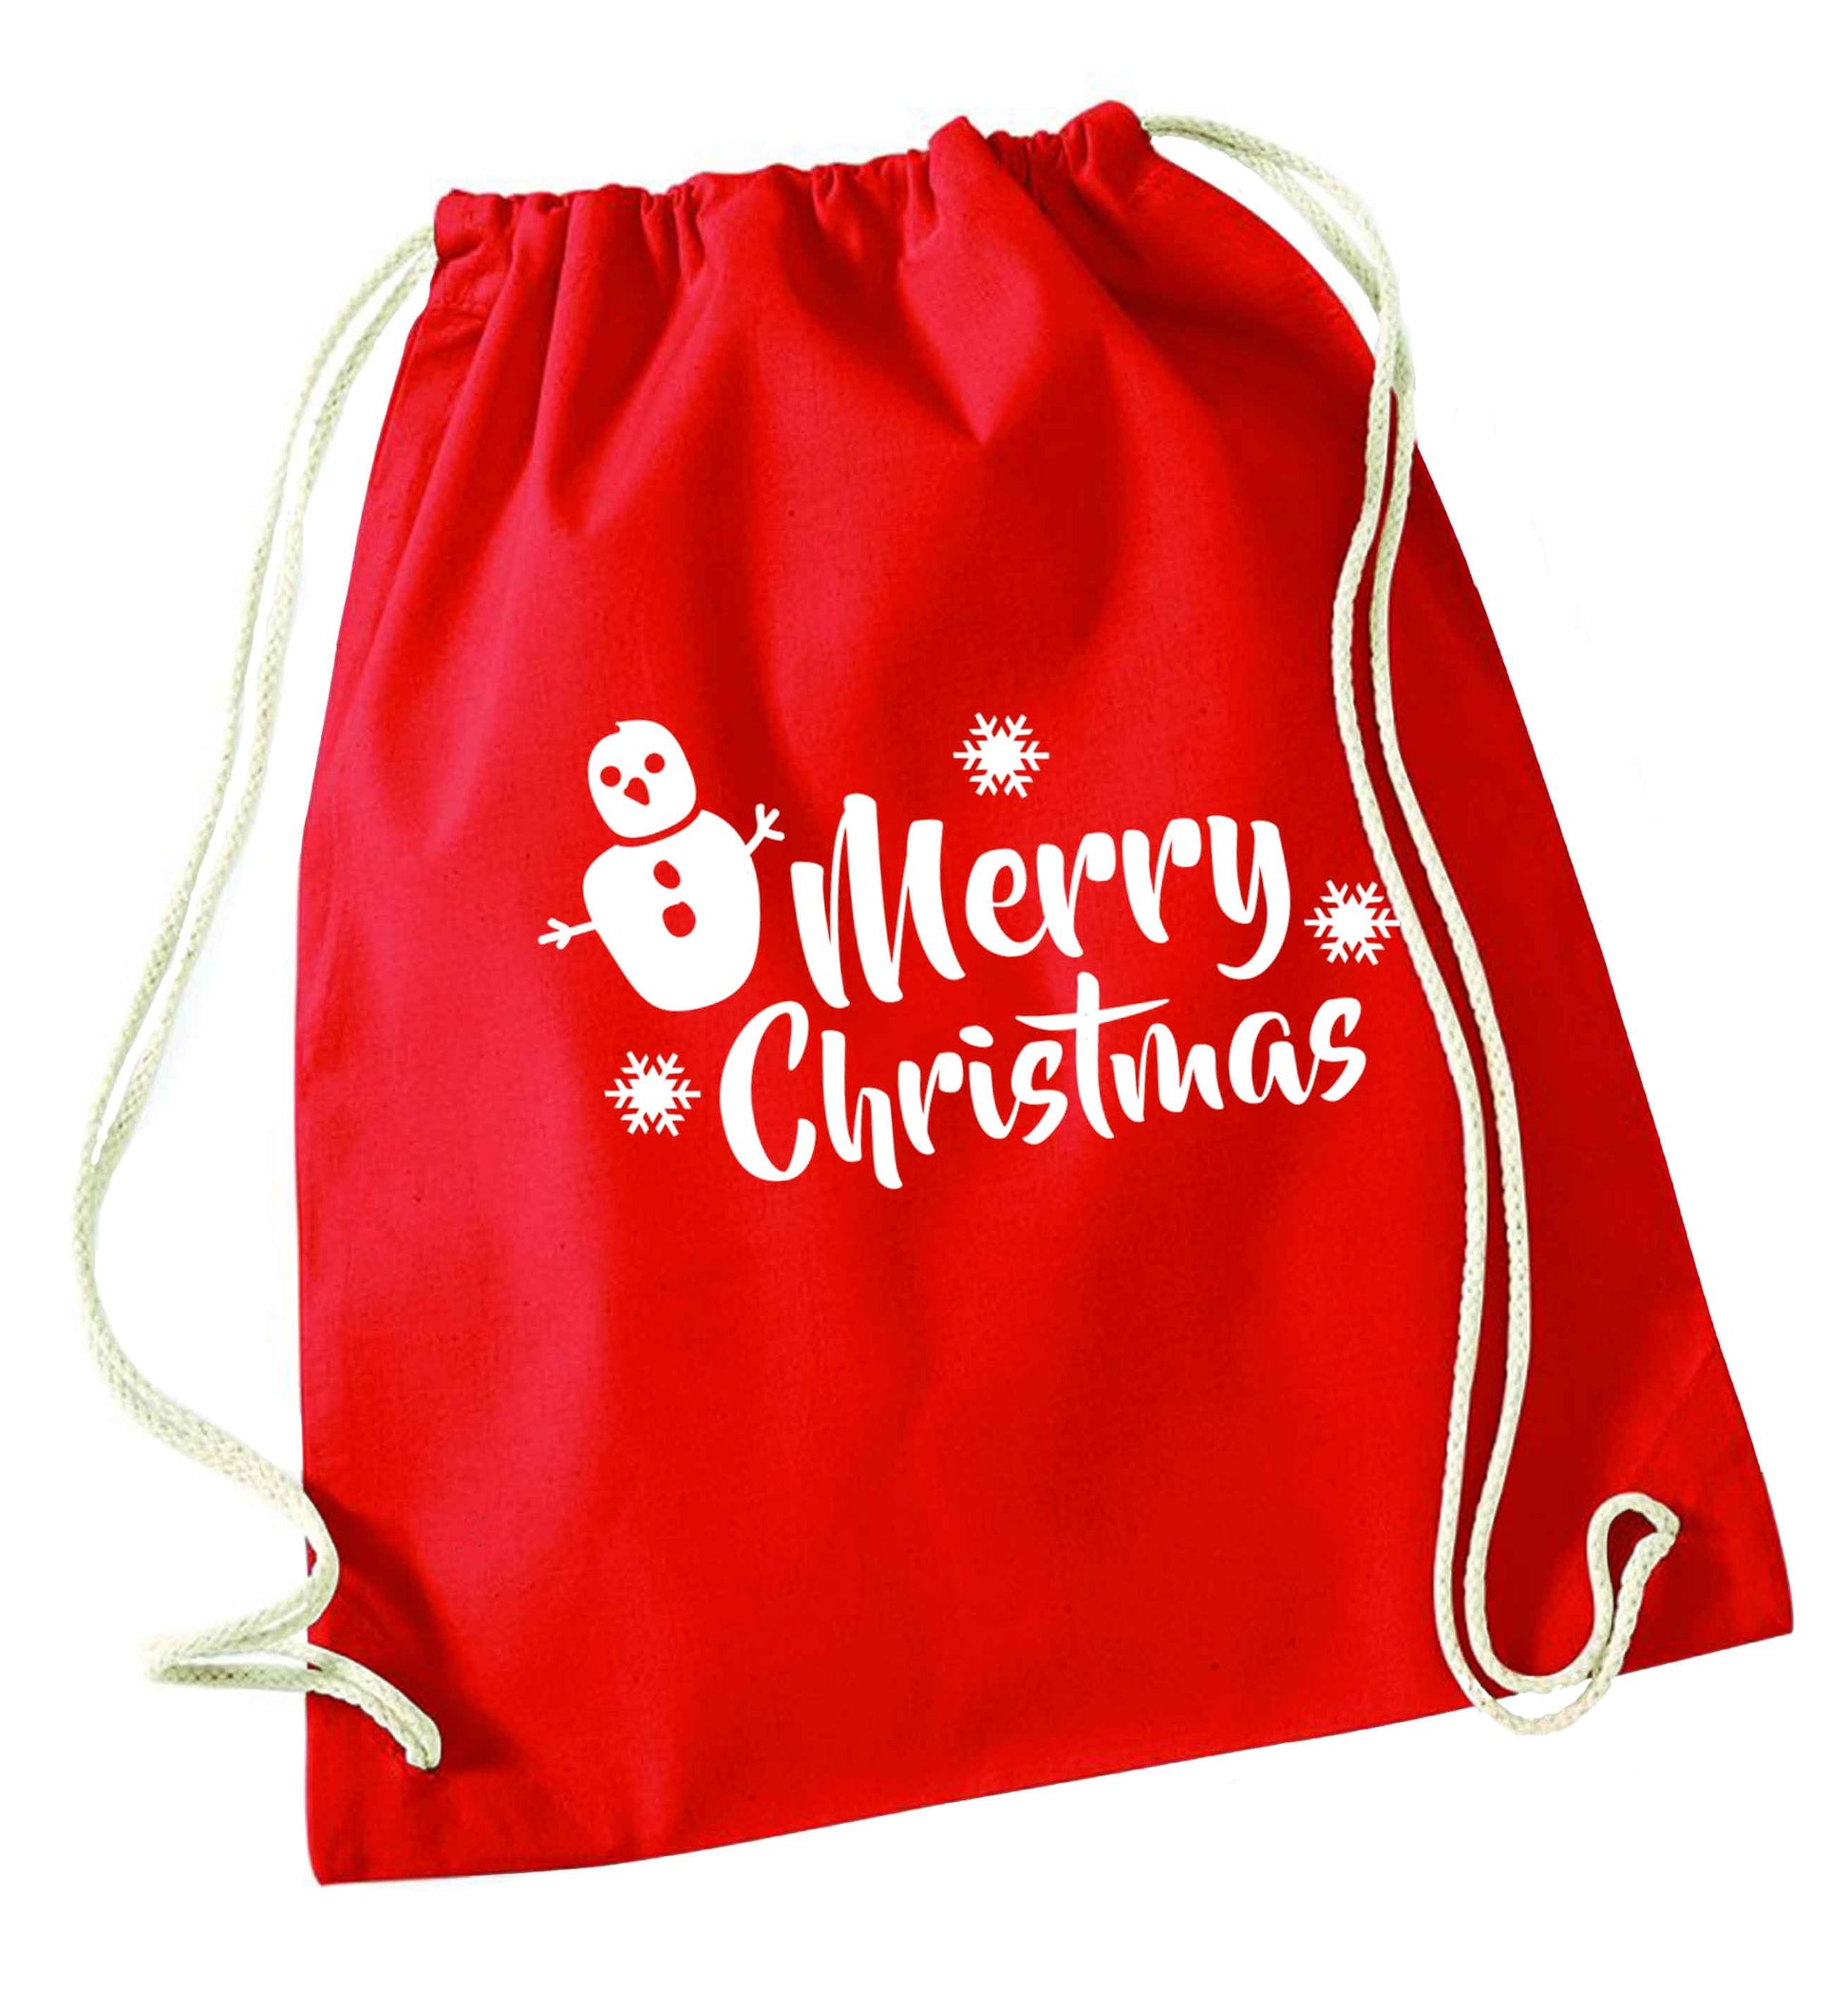 Merry Christmas - snowman red drawstring bag 